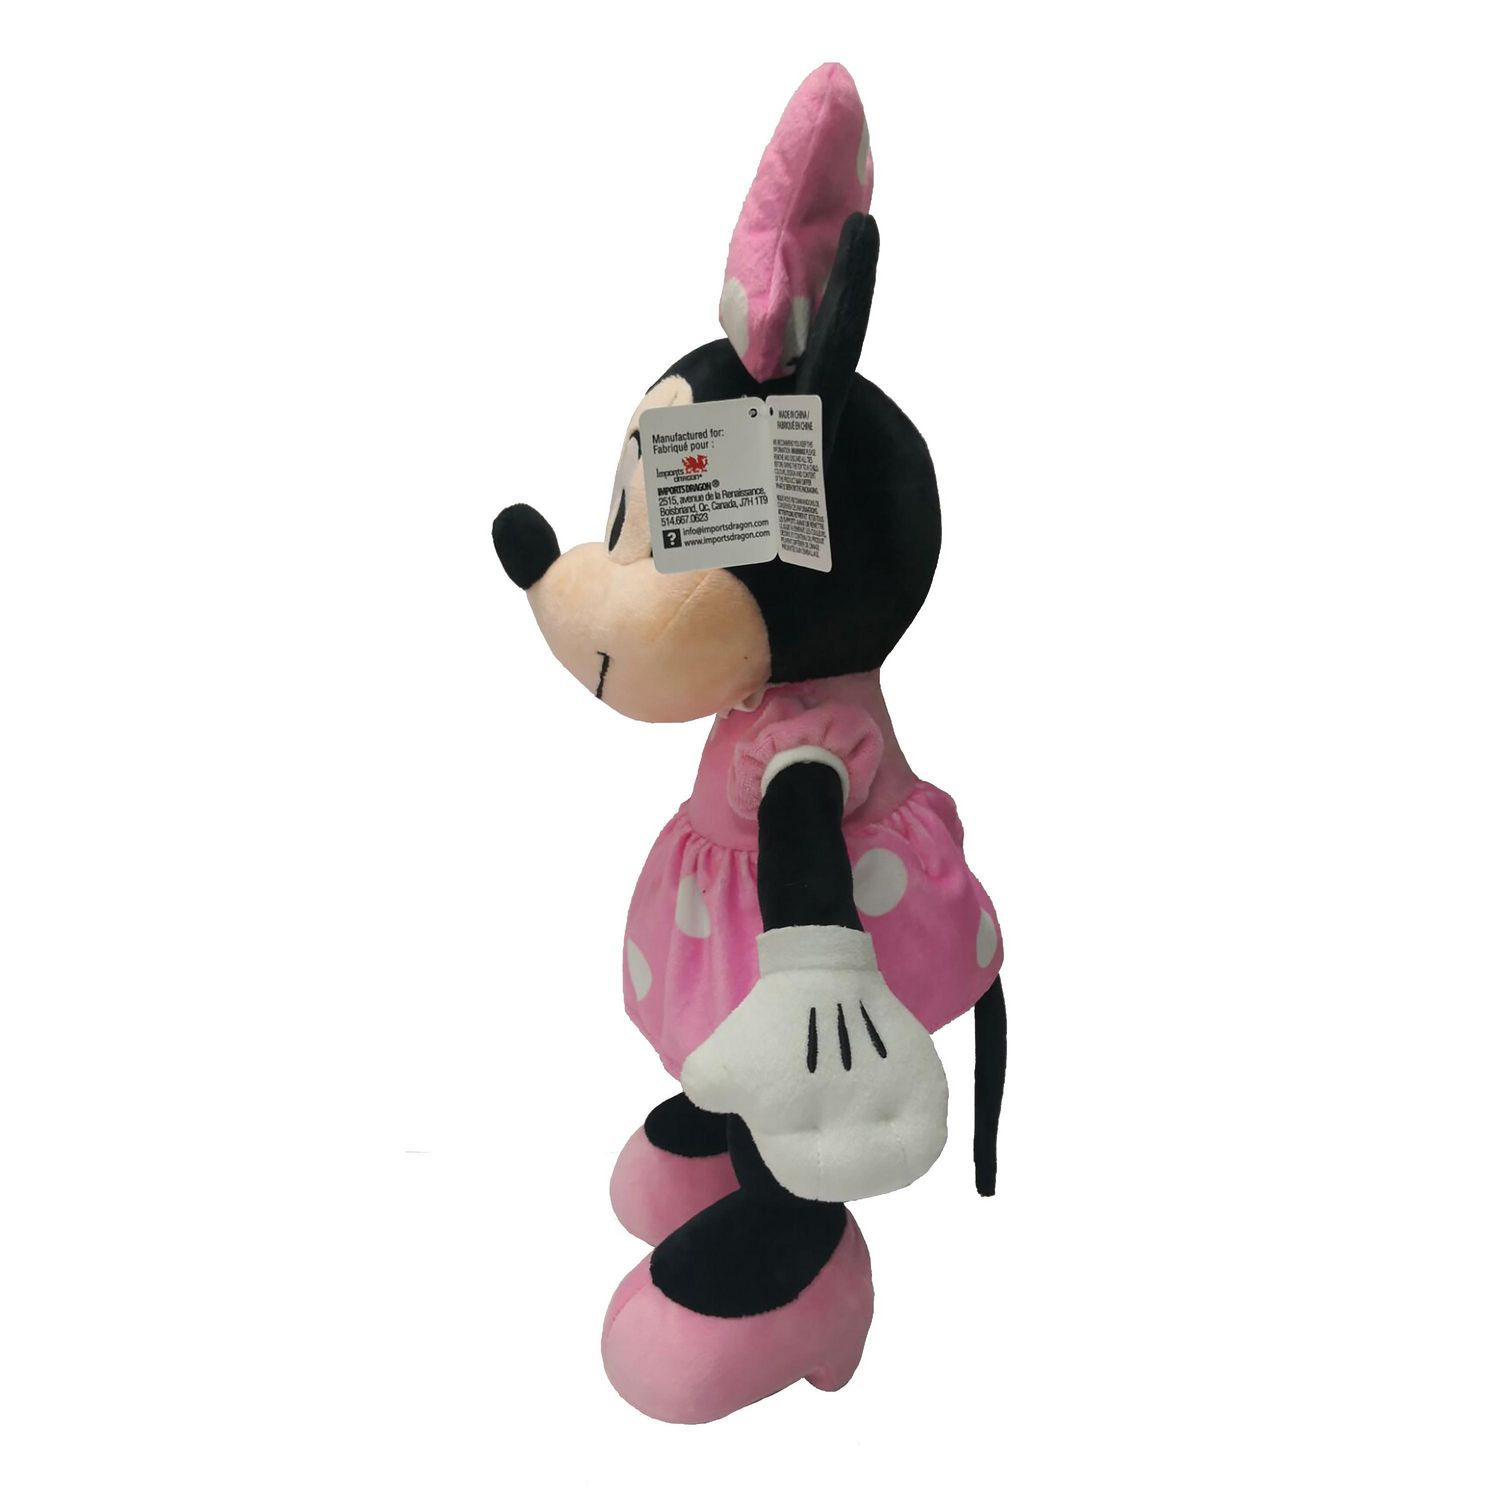 DISNEY MINNIE MOUSE Hand Bag Plush Purse Minnie Mouse Soft Head by Grupo  Ruz $21.24 - PicClick AU